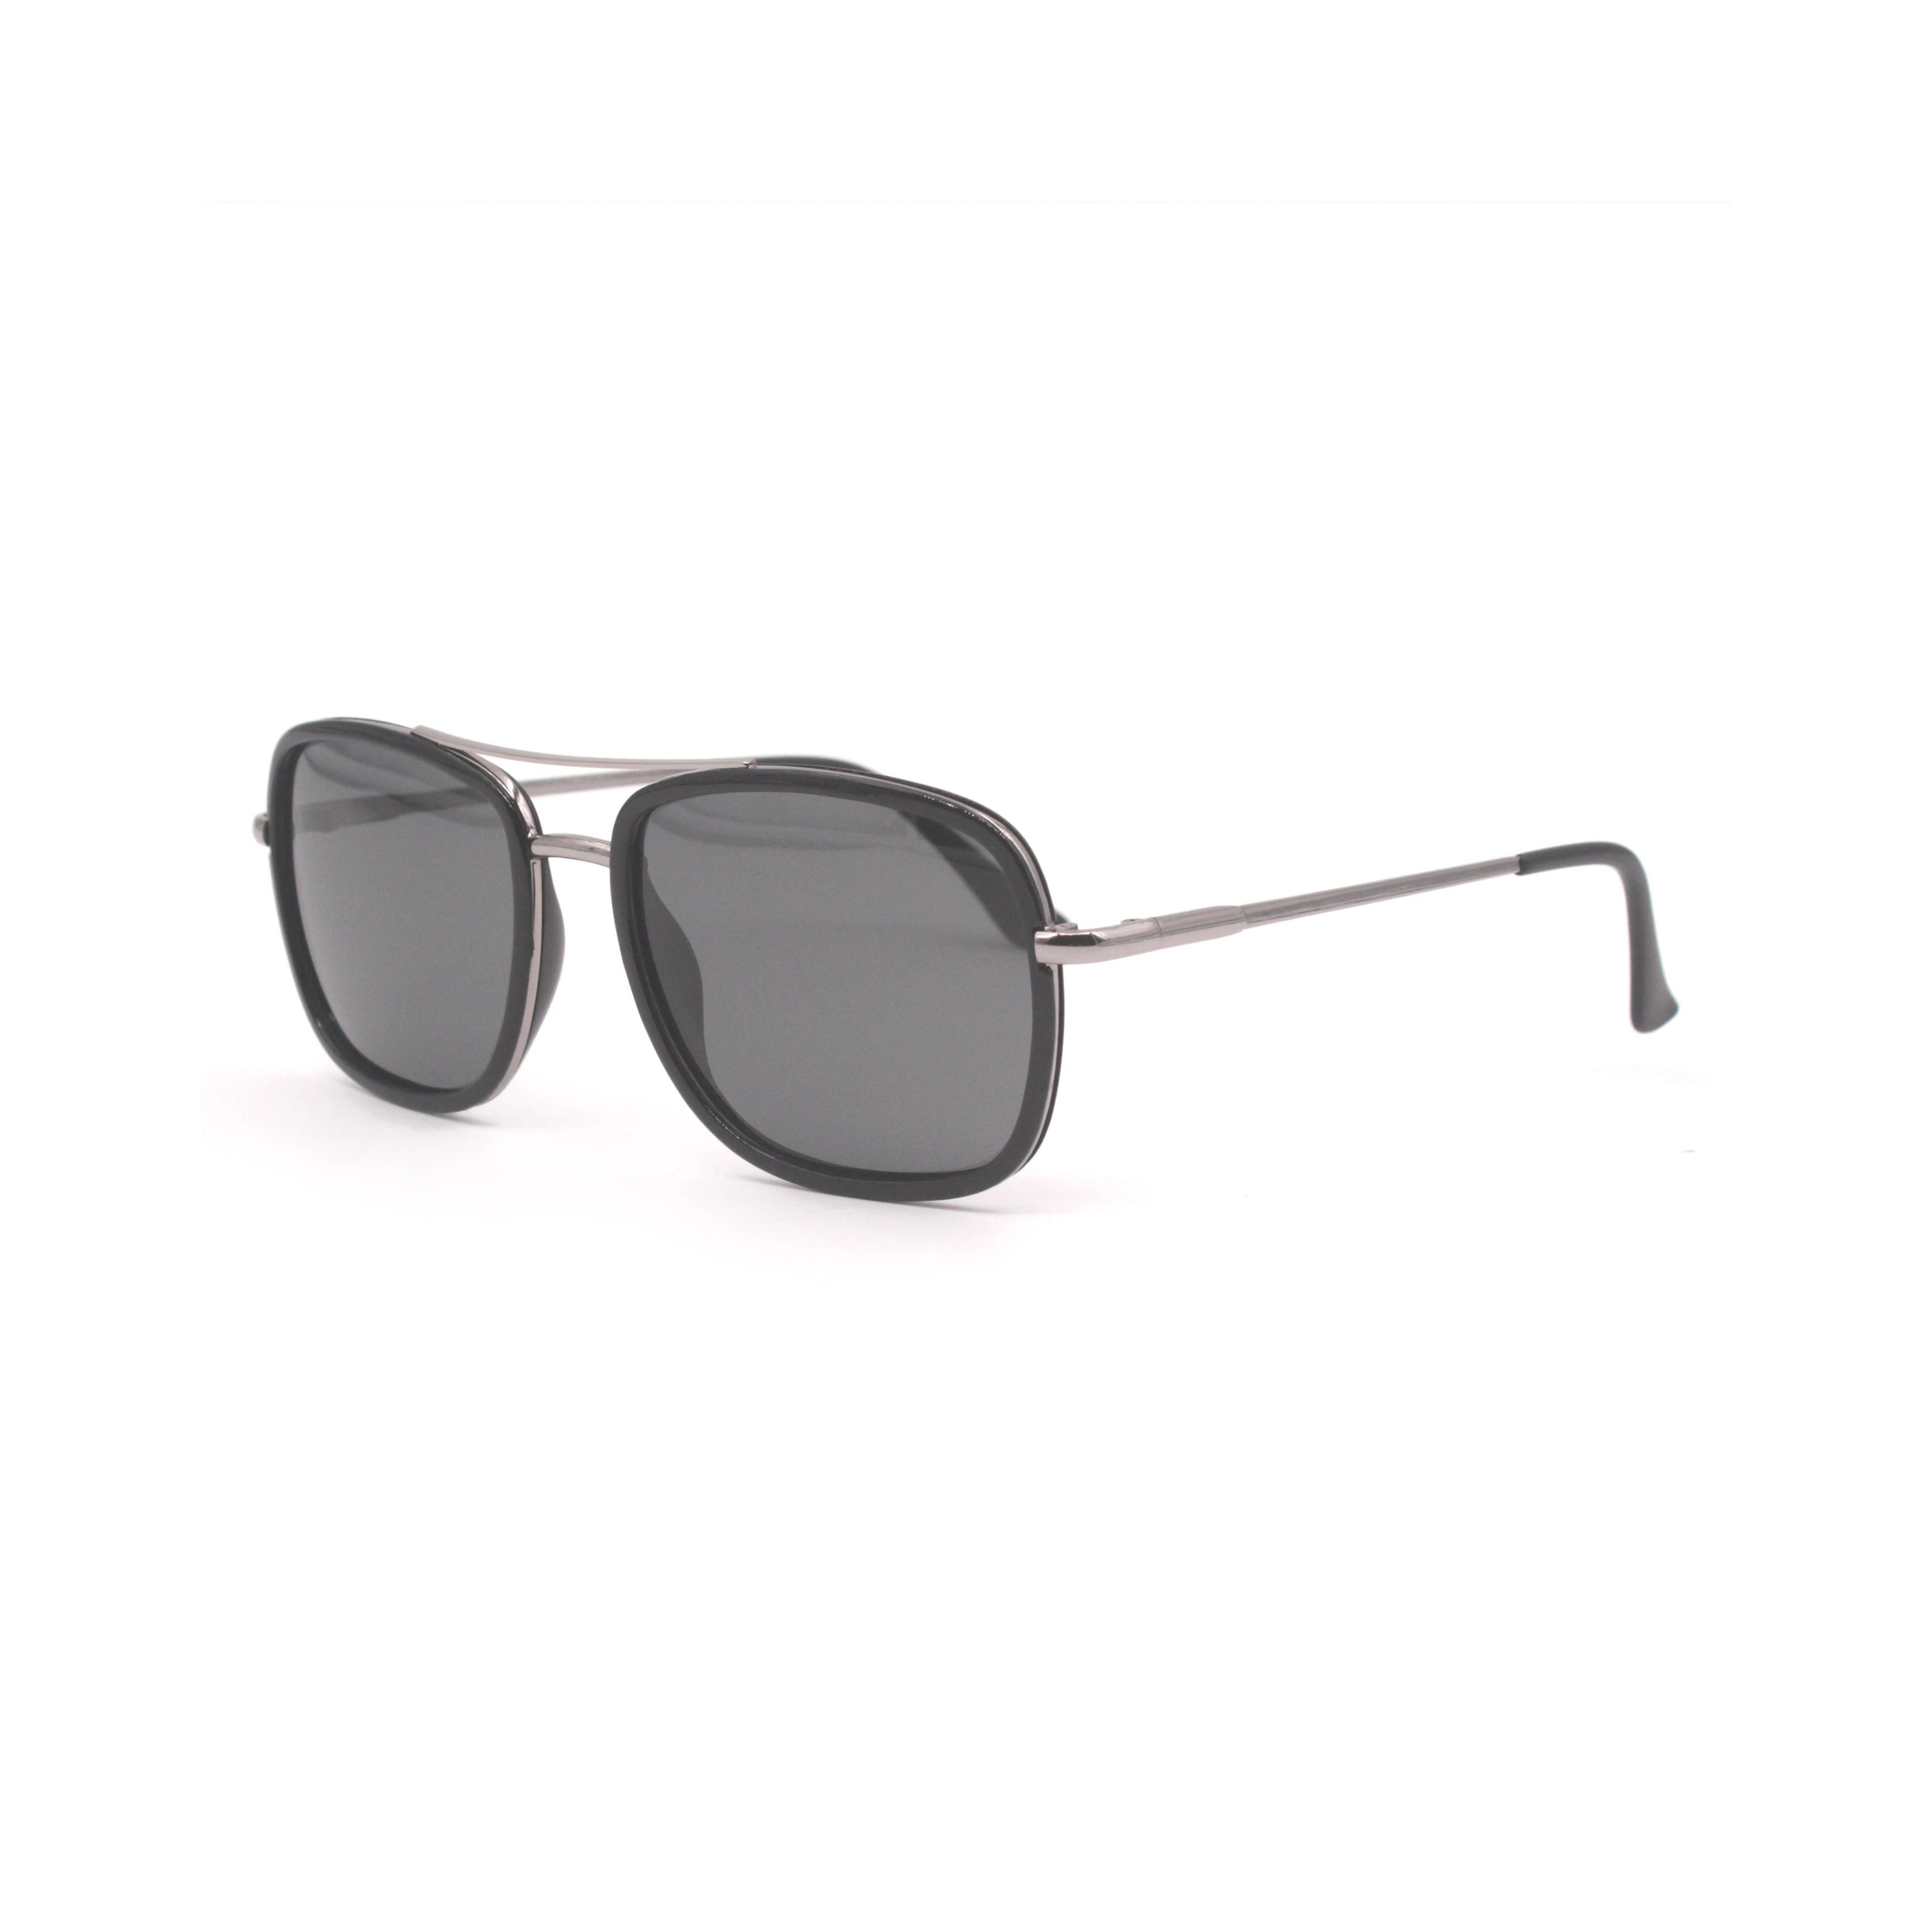 Eyewear 2020  TR90 Frame Mirrored lens Windproof Cycling Sport Polarized Sunglasses For Men Women